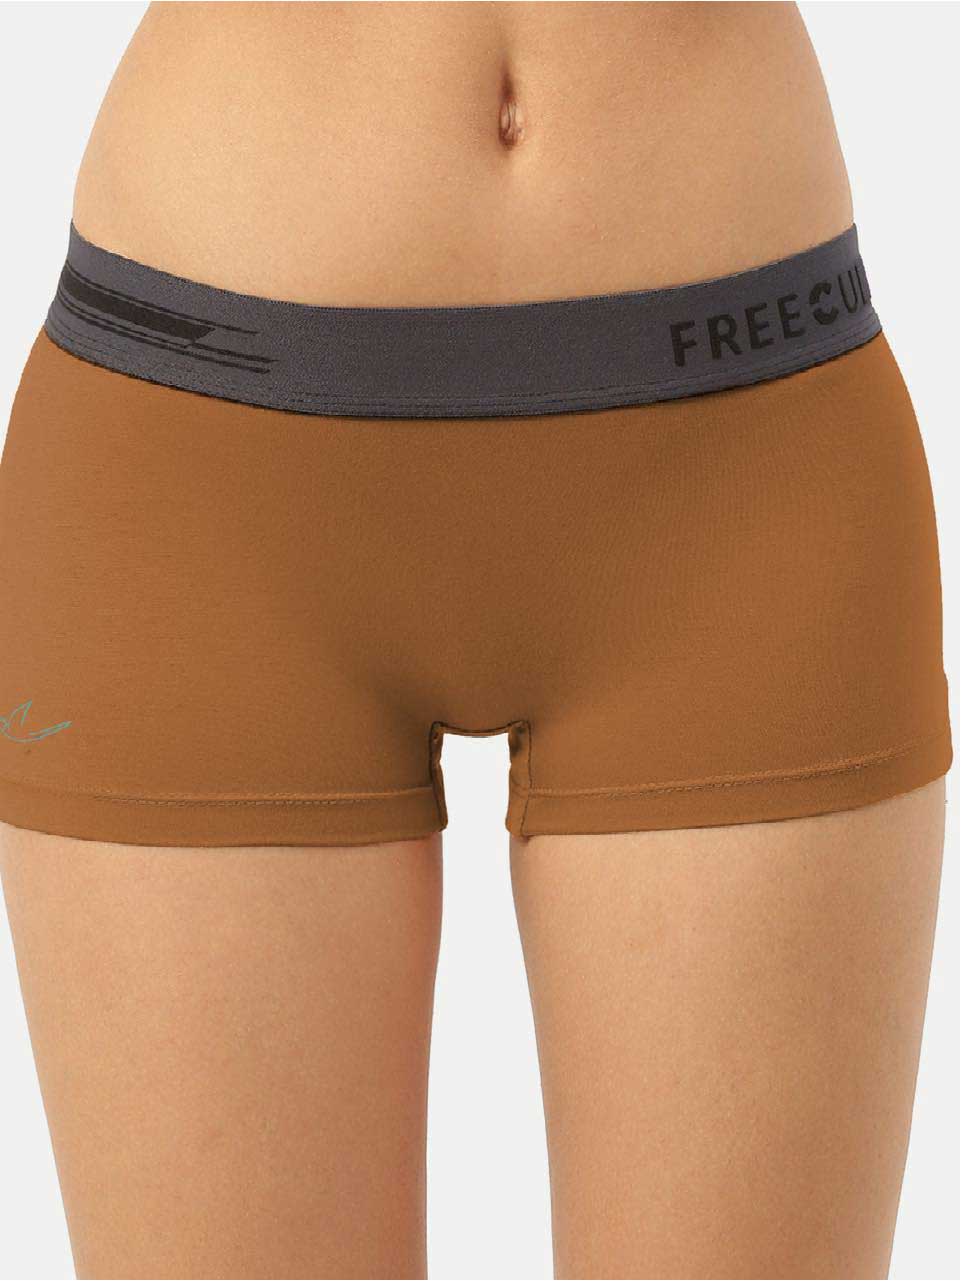 Women's Micro Modal Boy Shorts (Pack of 3)